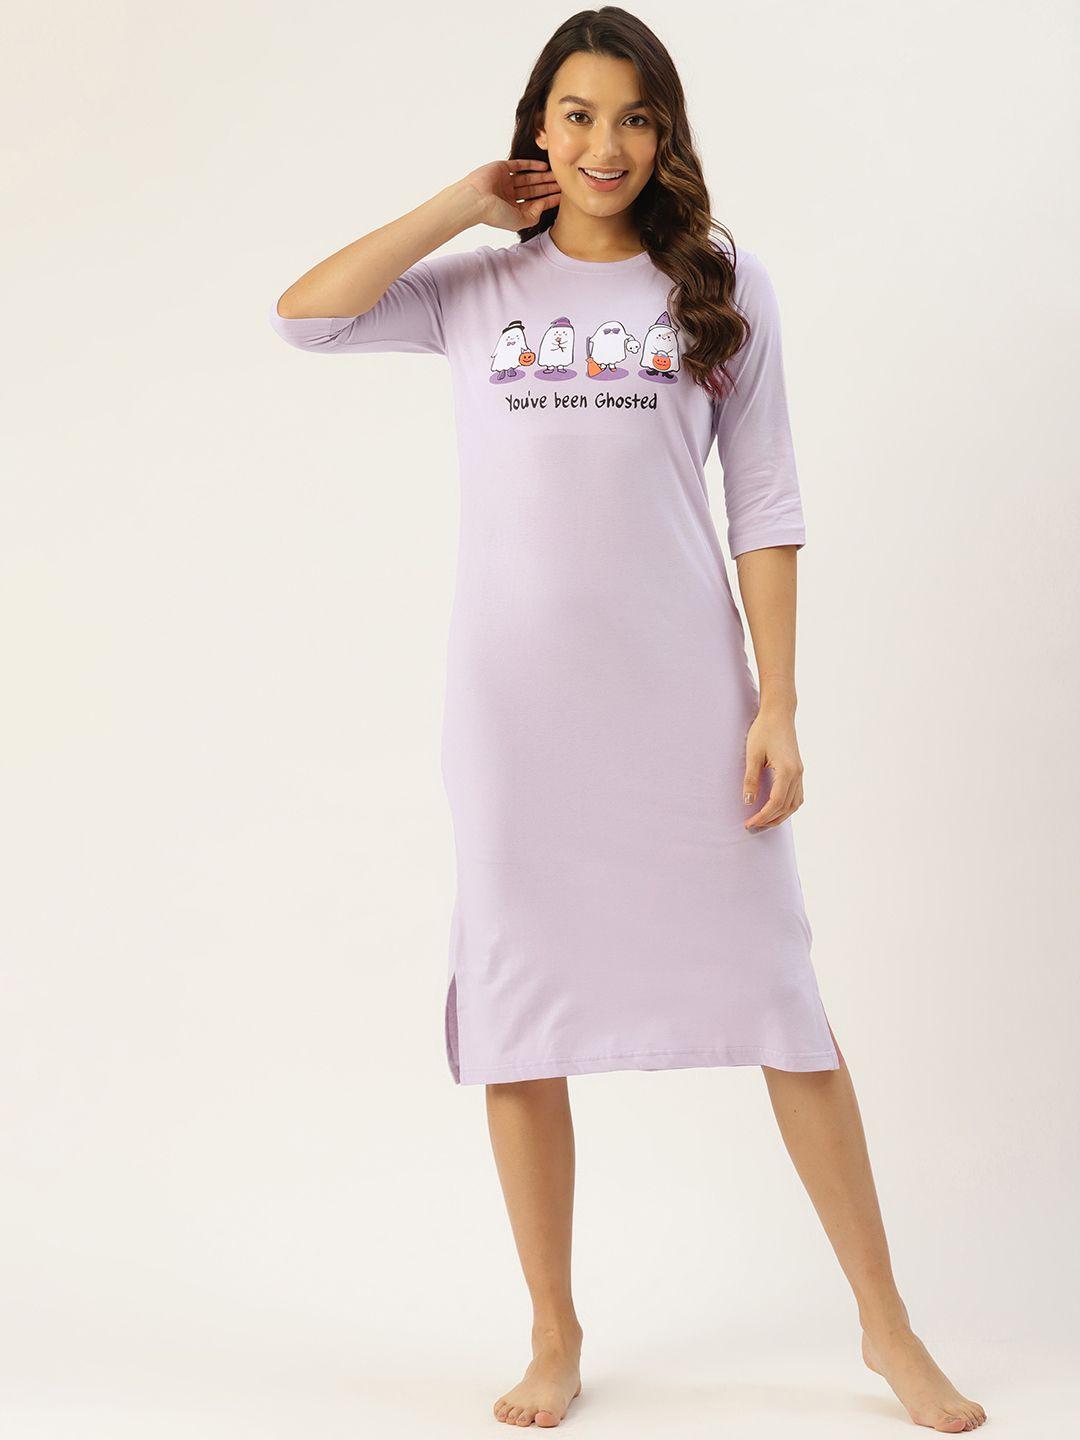 dressberry conversational printed knitted t-shirt nightdress